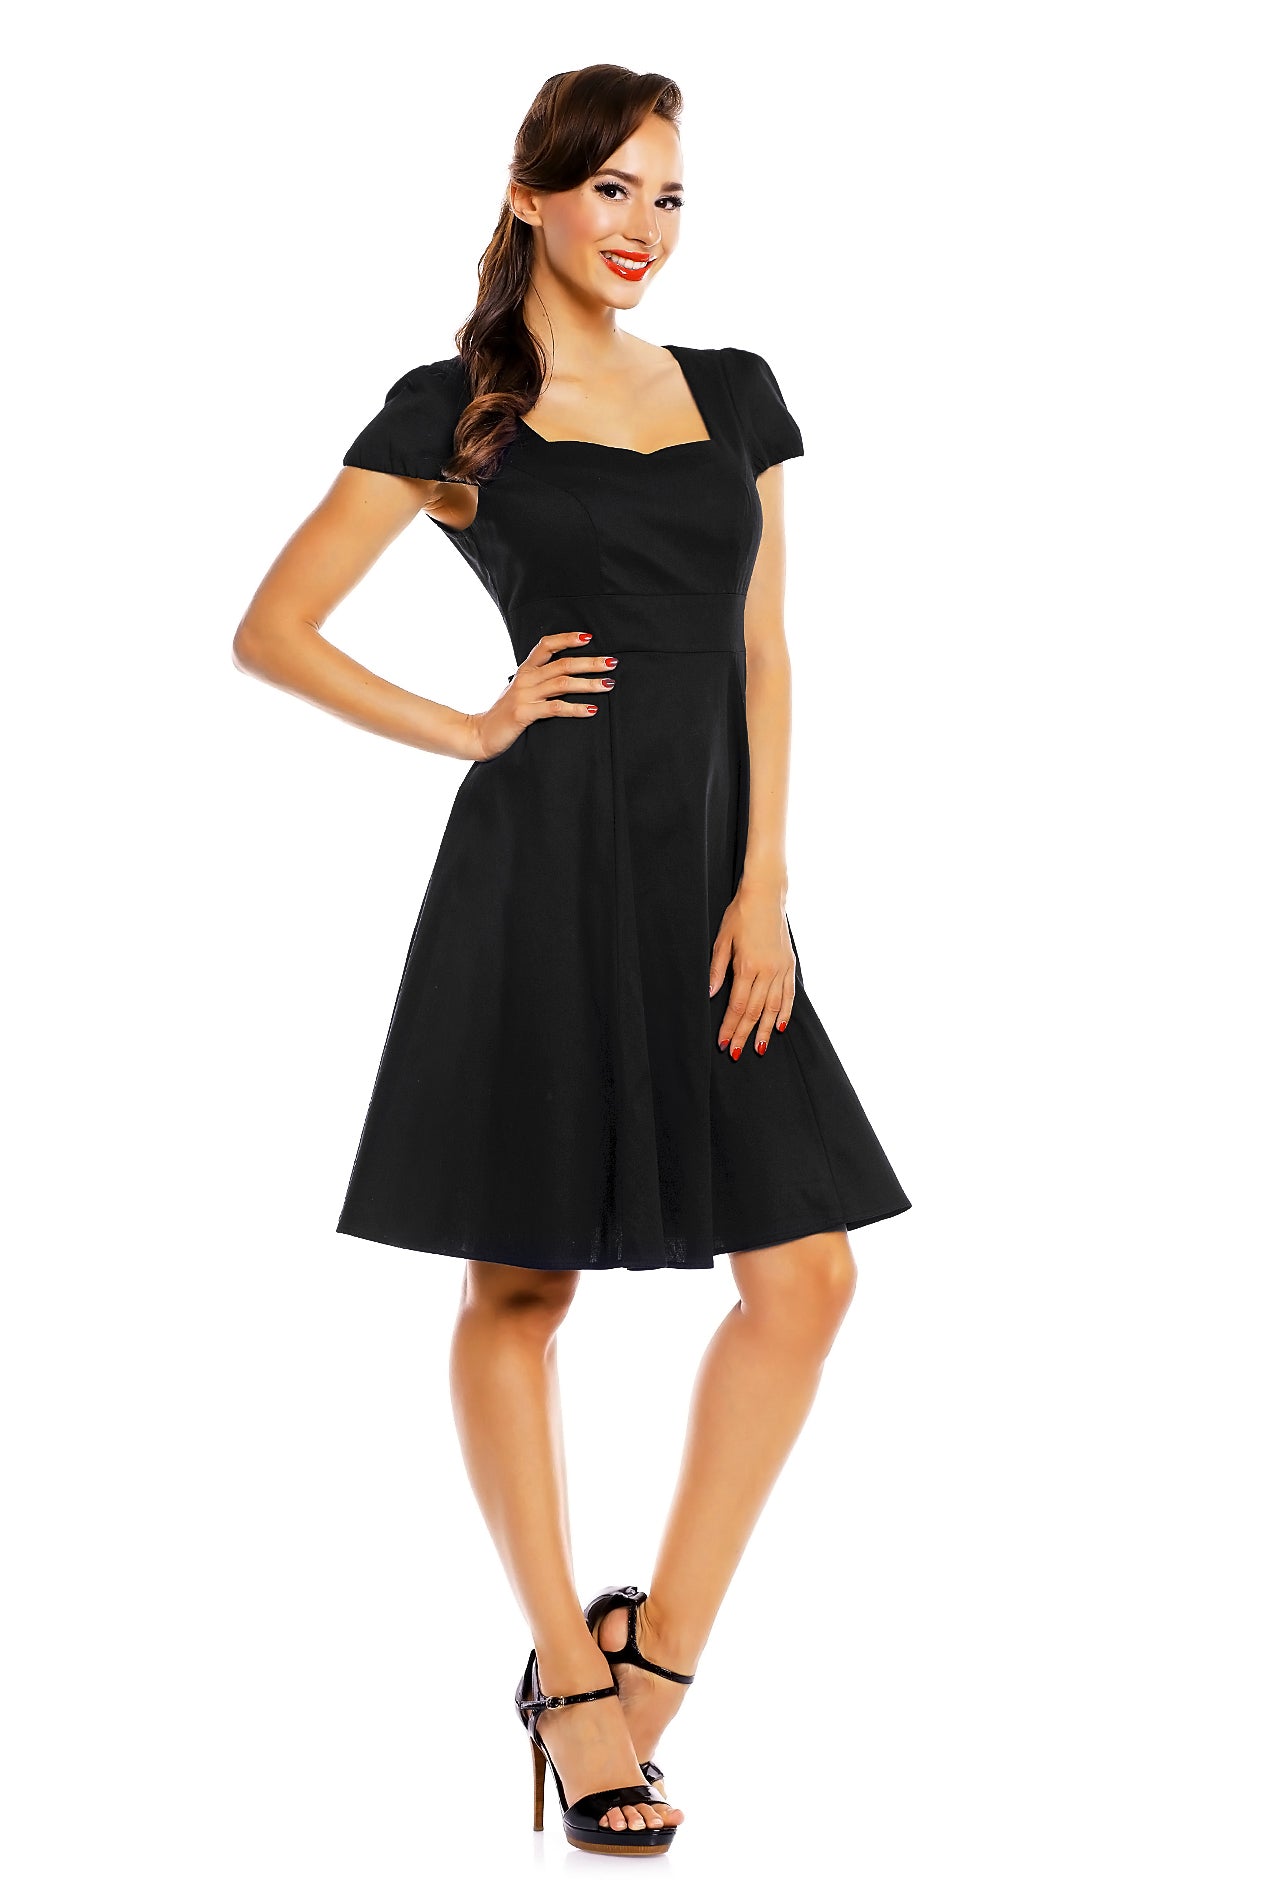 Model wearing a plain black vintage dress